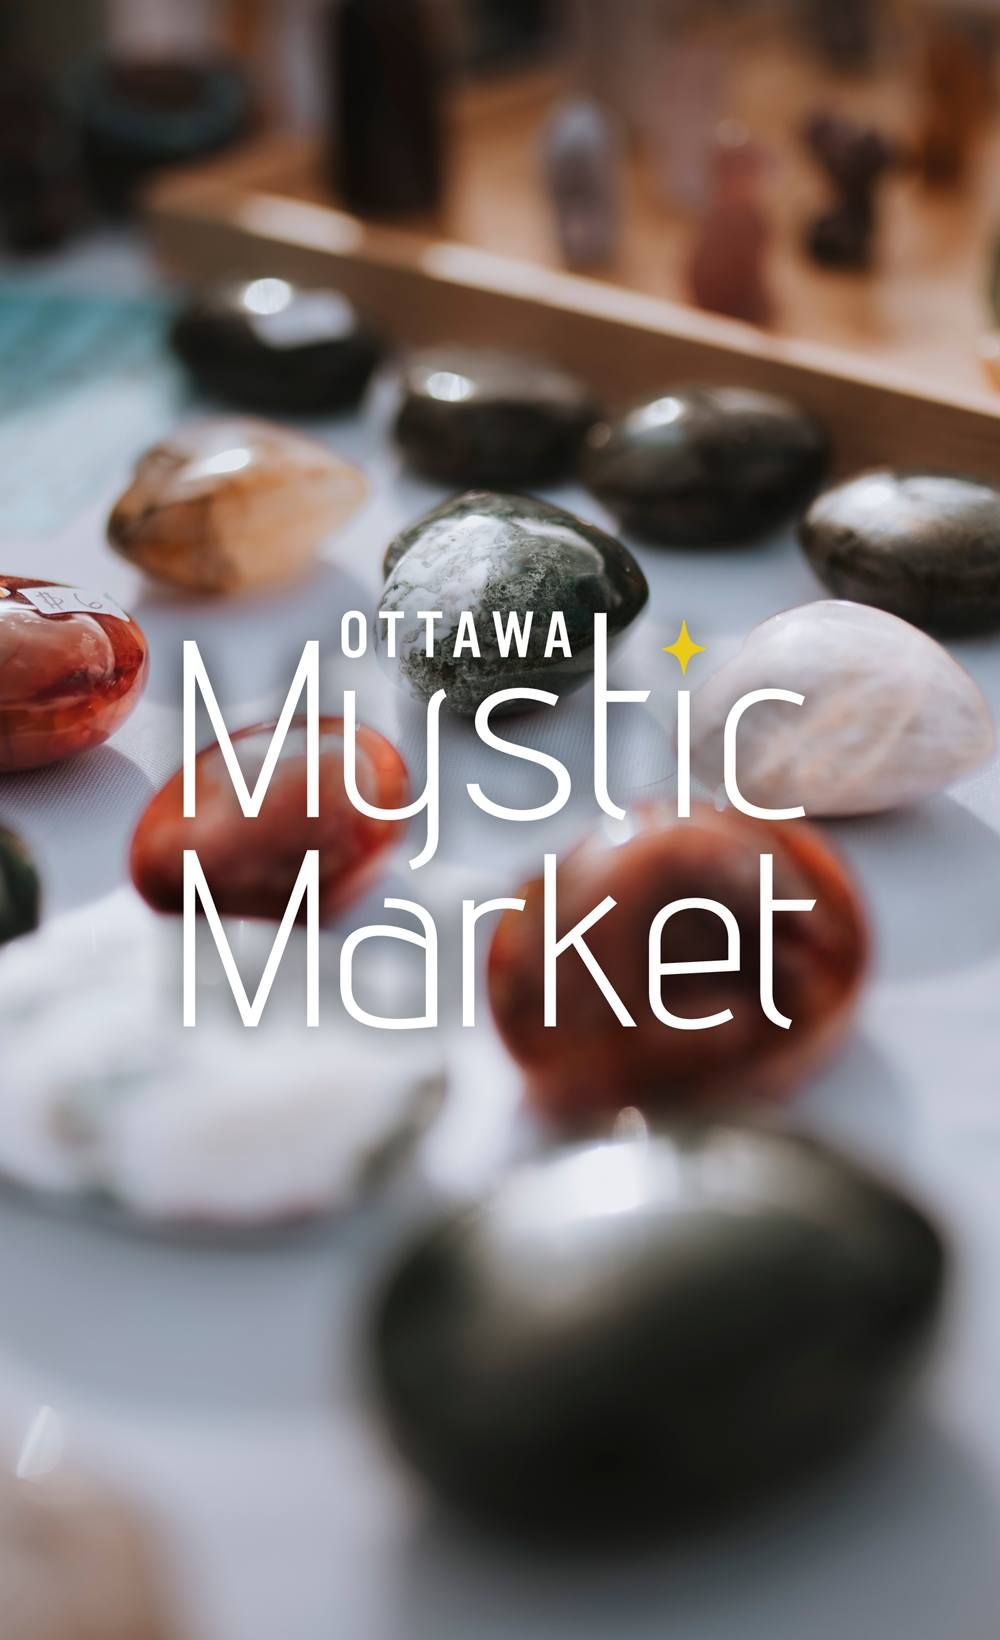 Ottawa Mystic Market- Summer Solstice Celebration \u2600\ufe0f\ud83d\udd2e - Rain Date